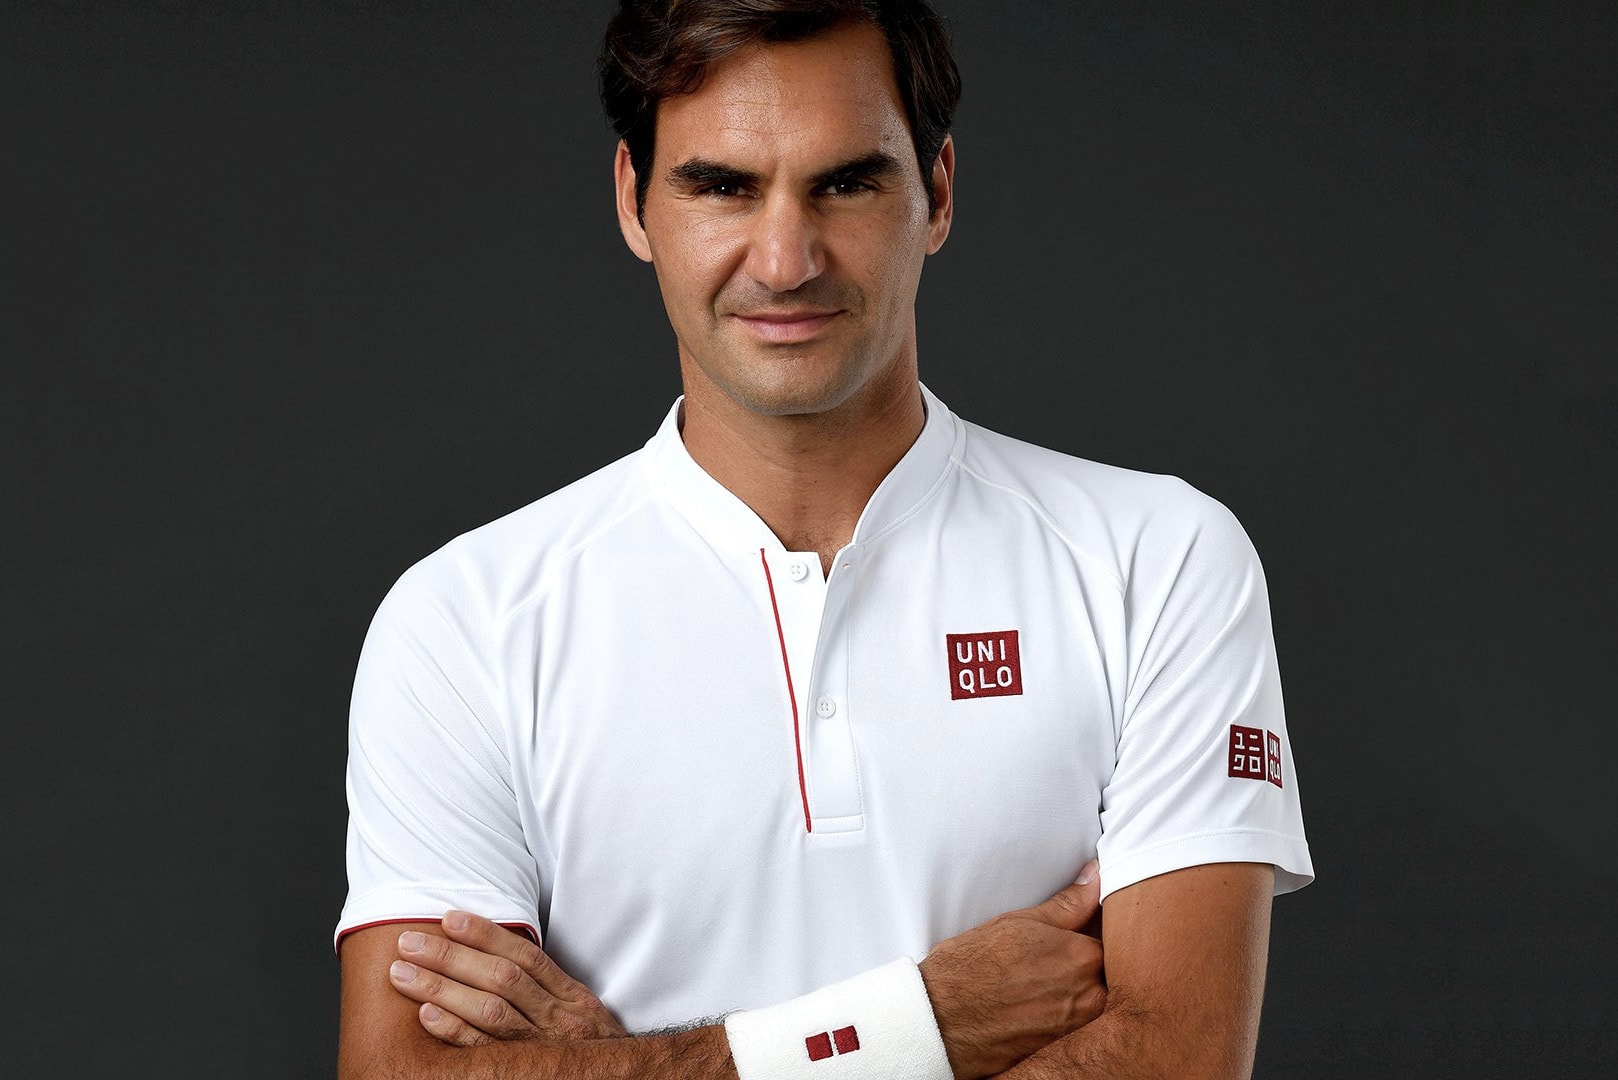 UNIQLO 宣布 Roger Federer 成為全球品牌大使